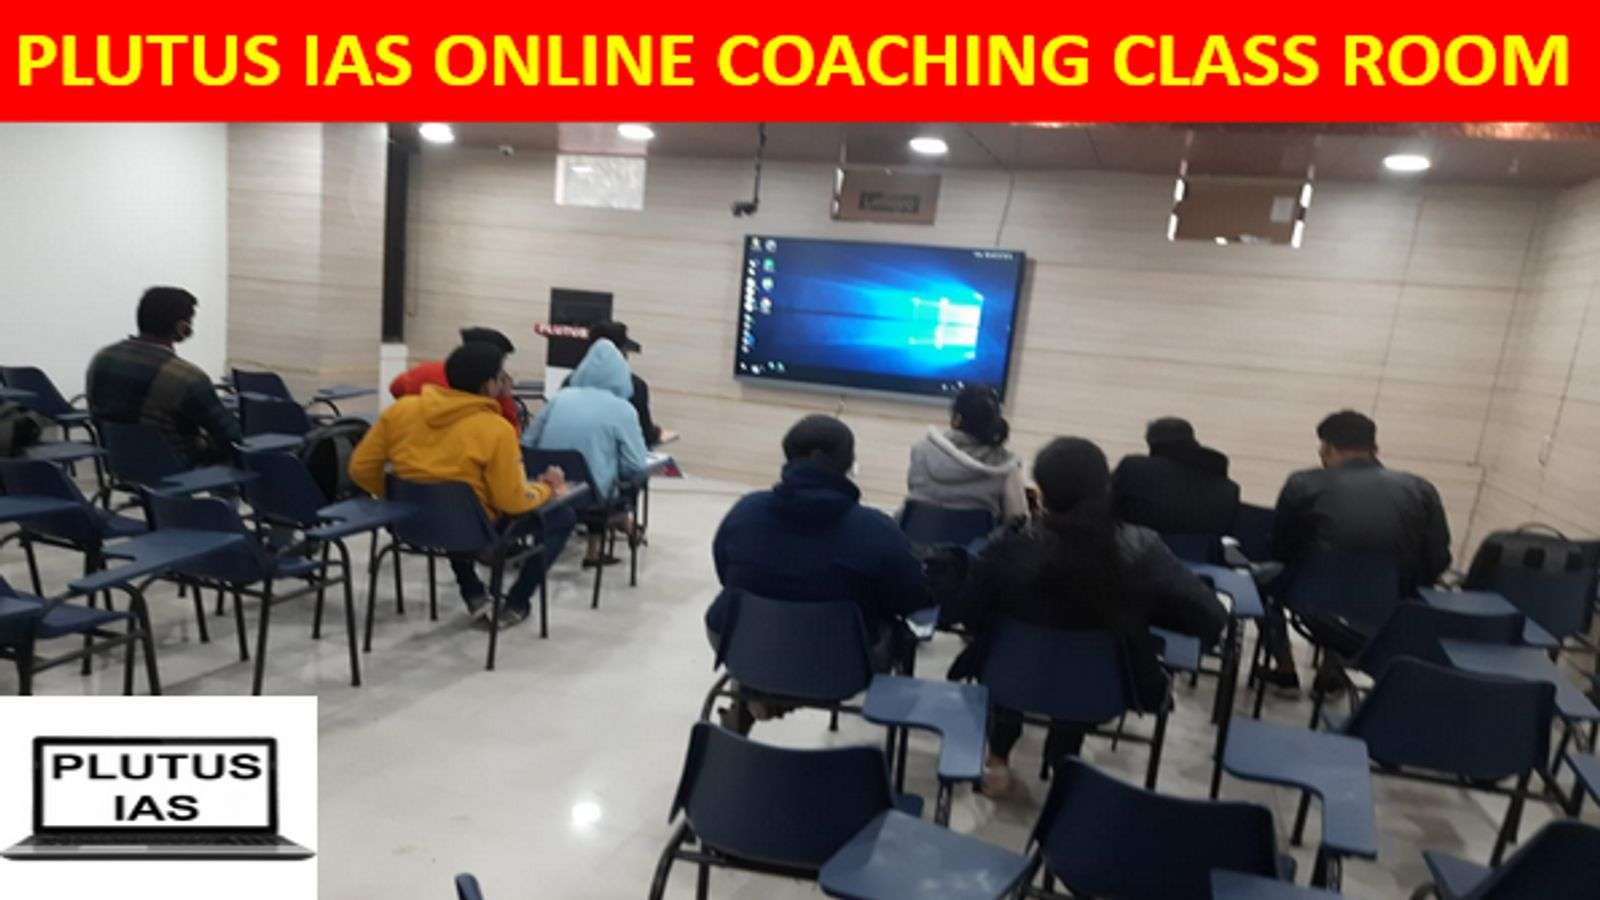 Plutus IAS Online Coaching Classroom